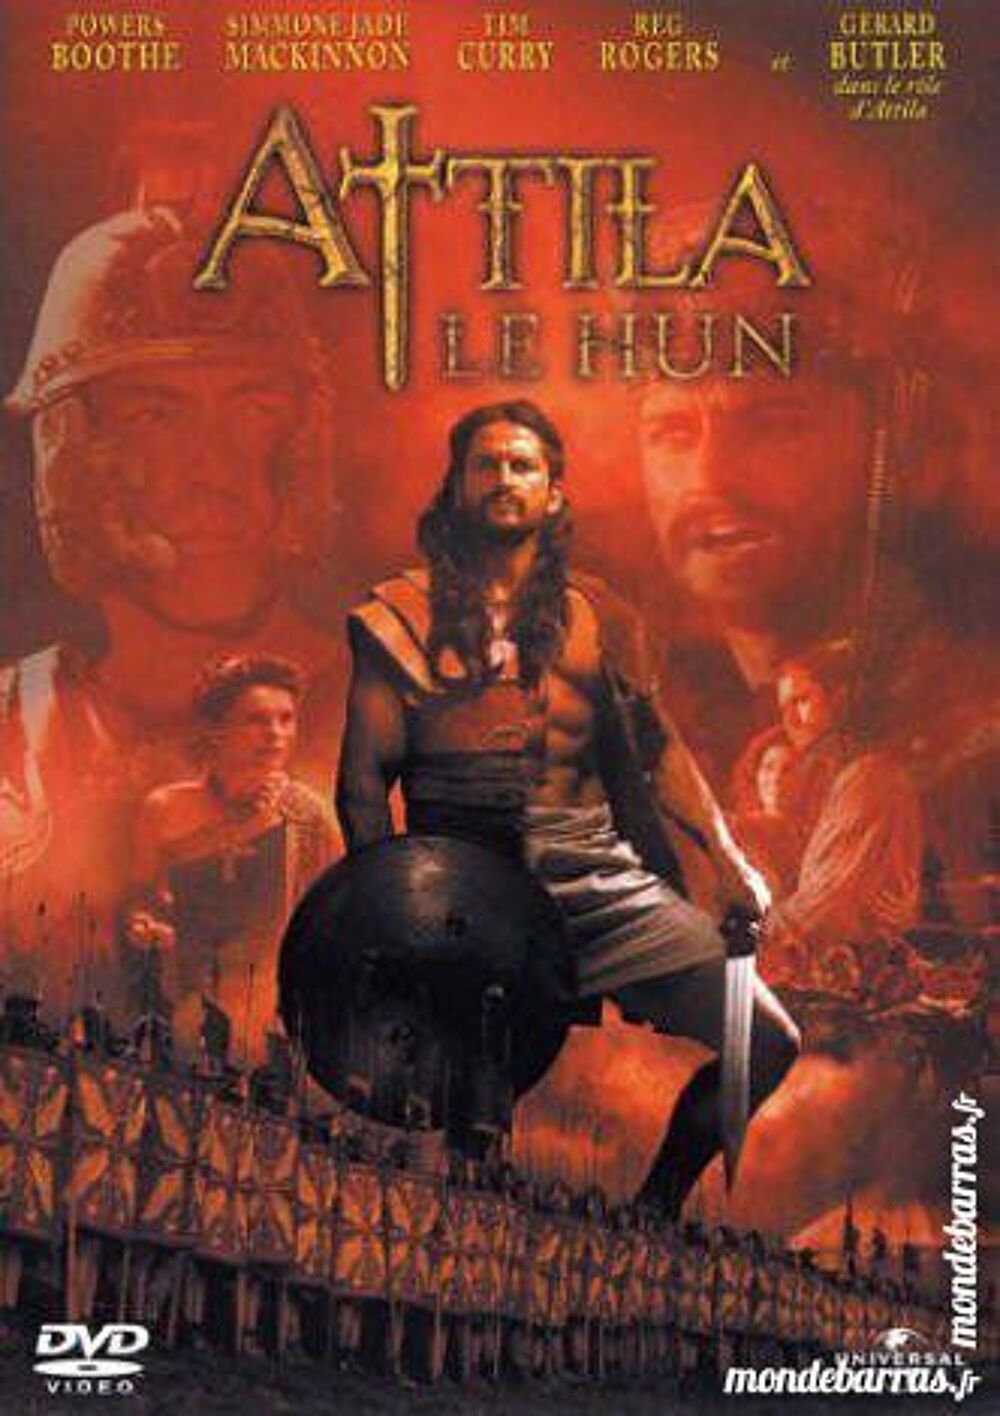 Dvd : Attila le Hun (174) DVD et blu-ray